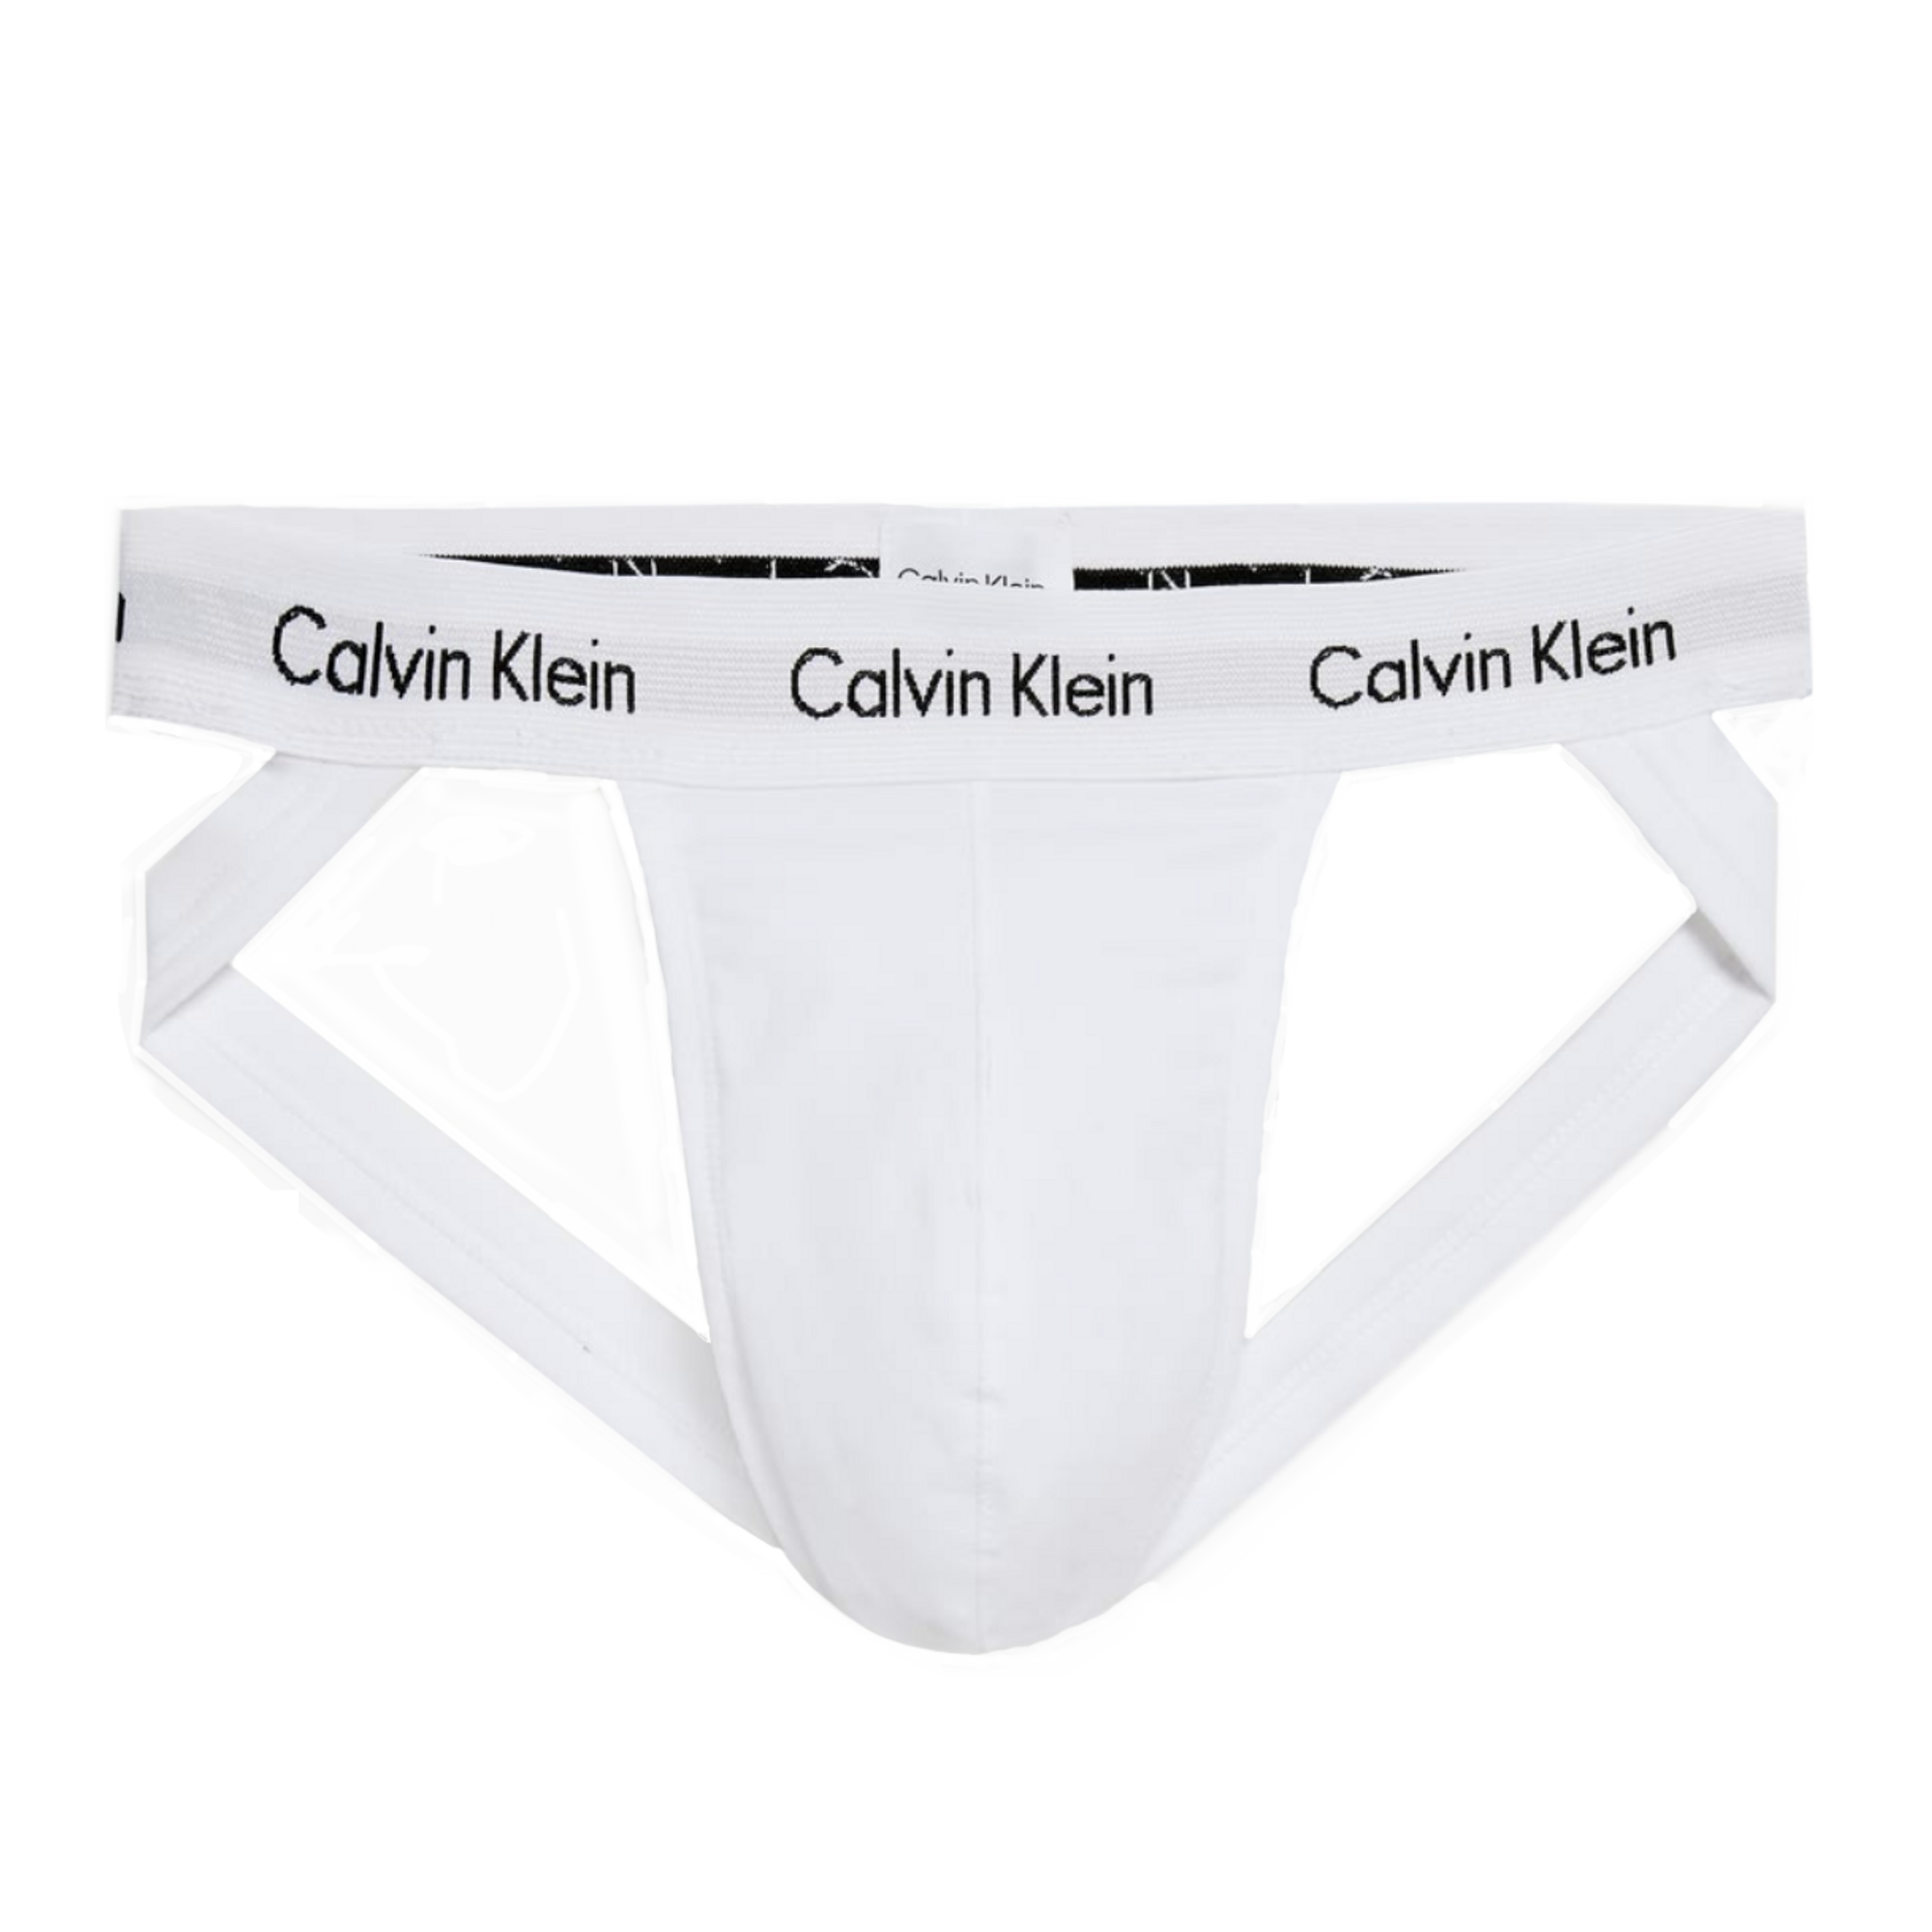 Calvin Klein Cotton Stretch 5-pack Jock Strap in White for Men